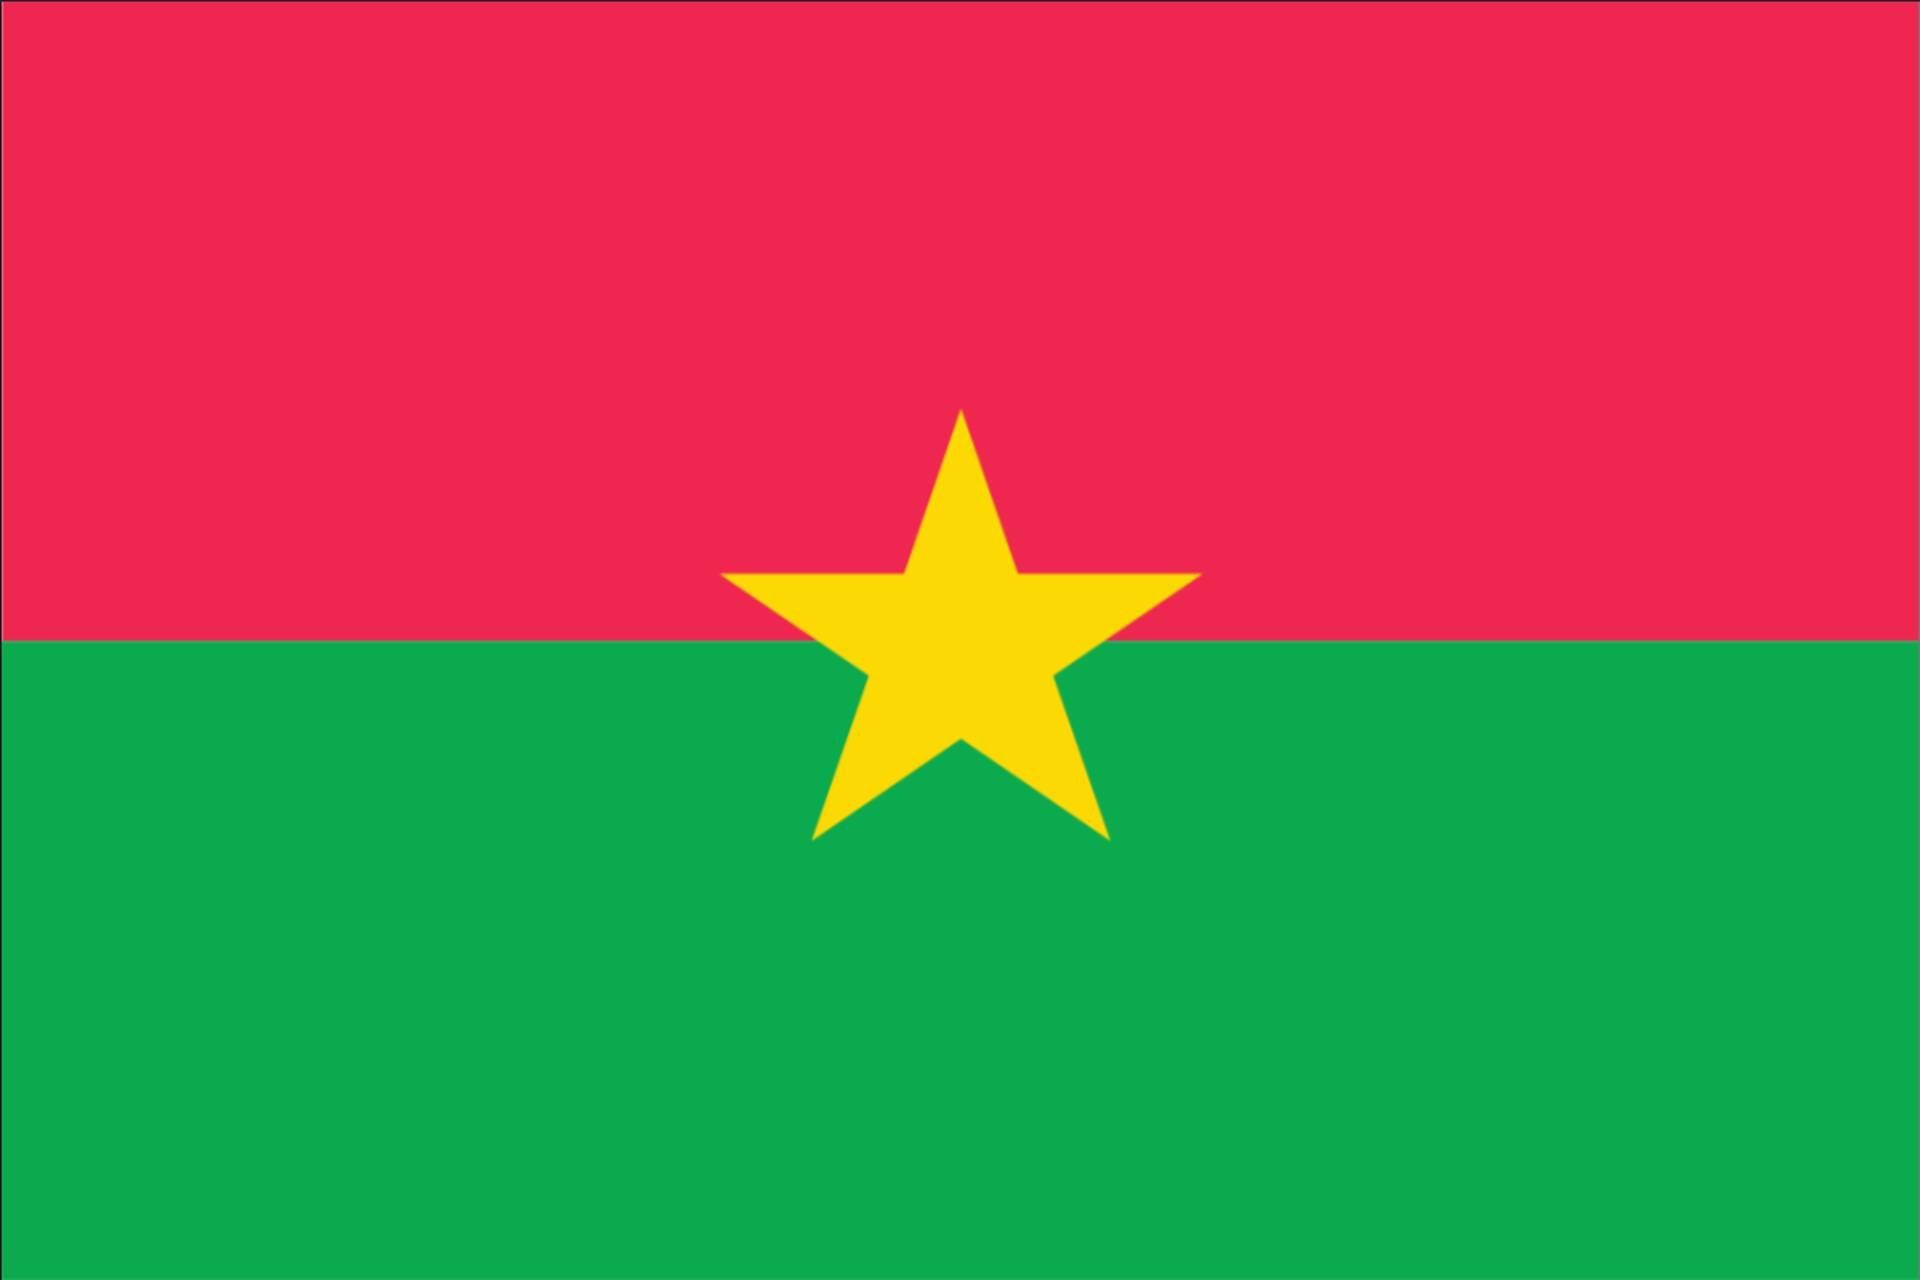 80 Faso Burkina Flagge g/m² flaggenmeer